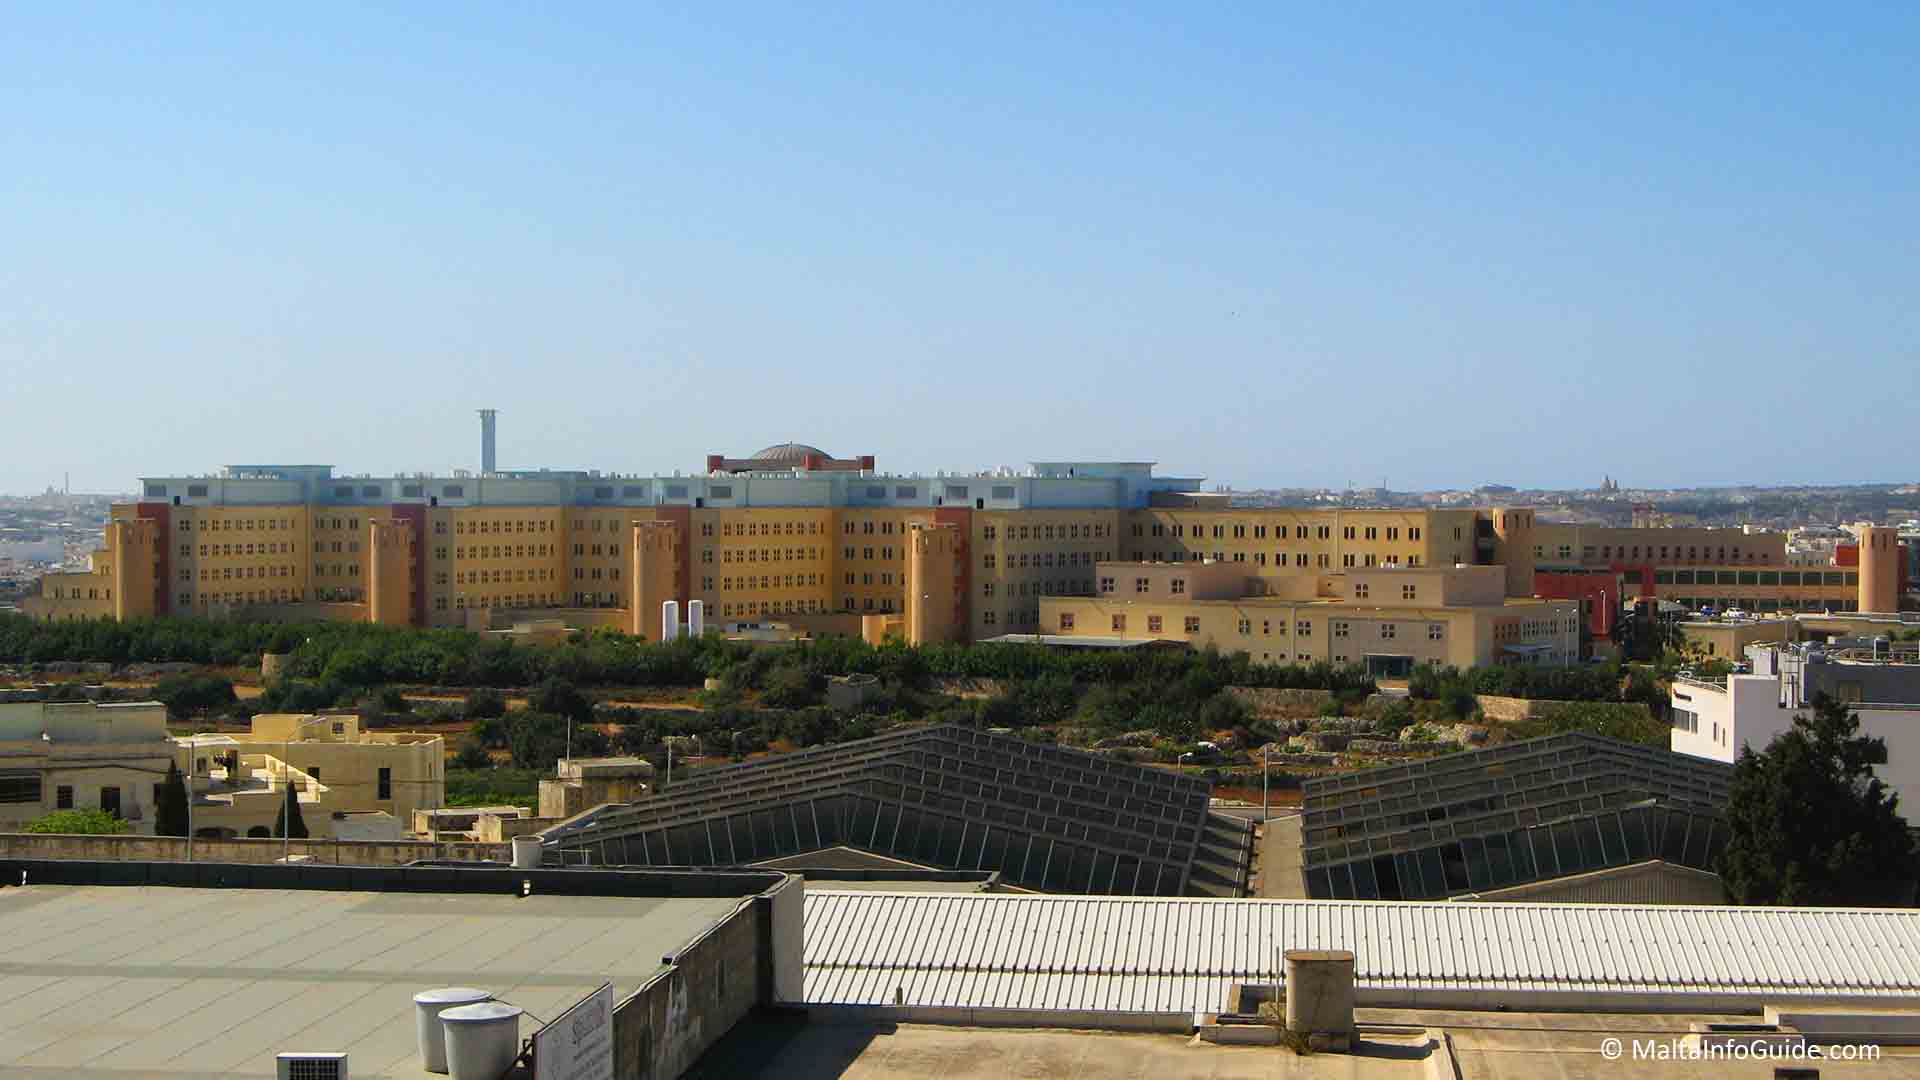 Mater Dei Hospital, the main hospital of Malta